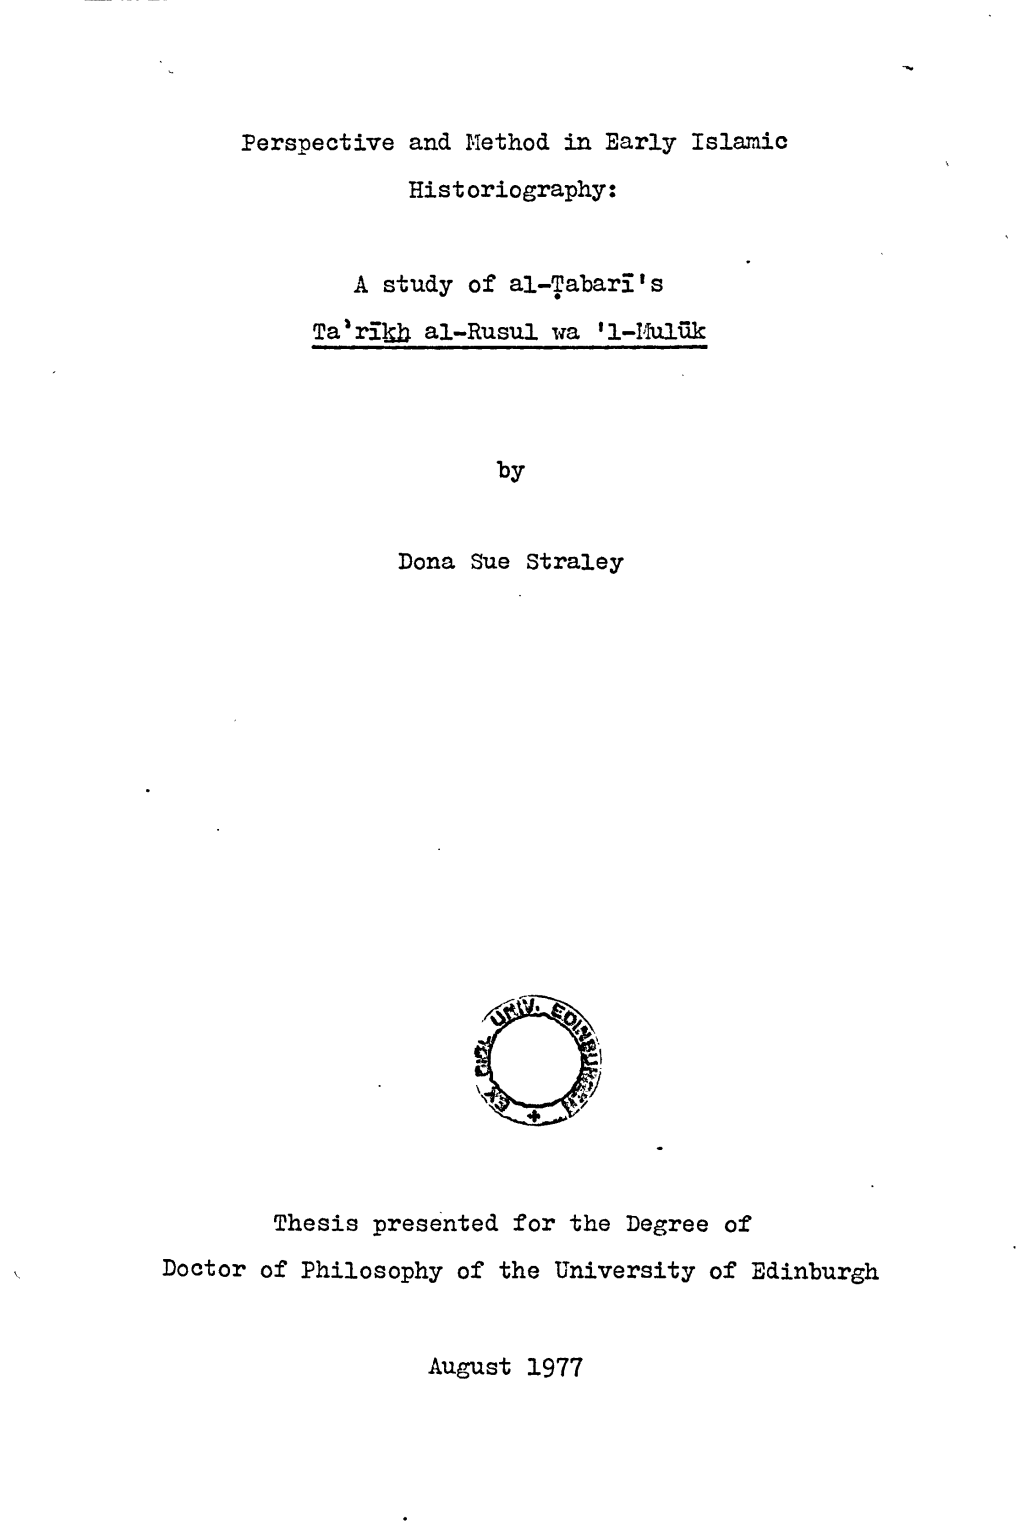 A Study of Al-Tabari's August 1977